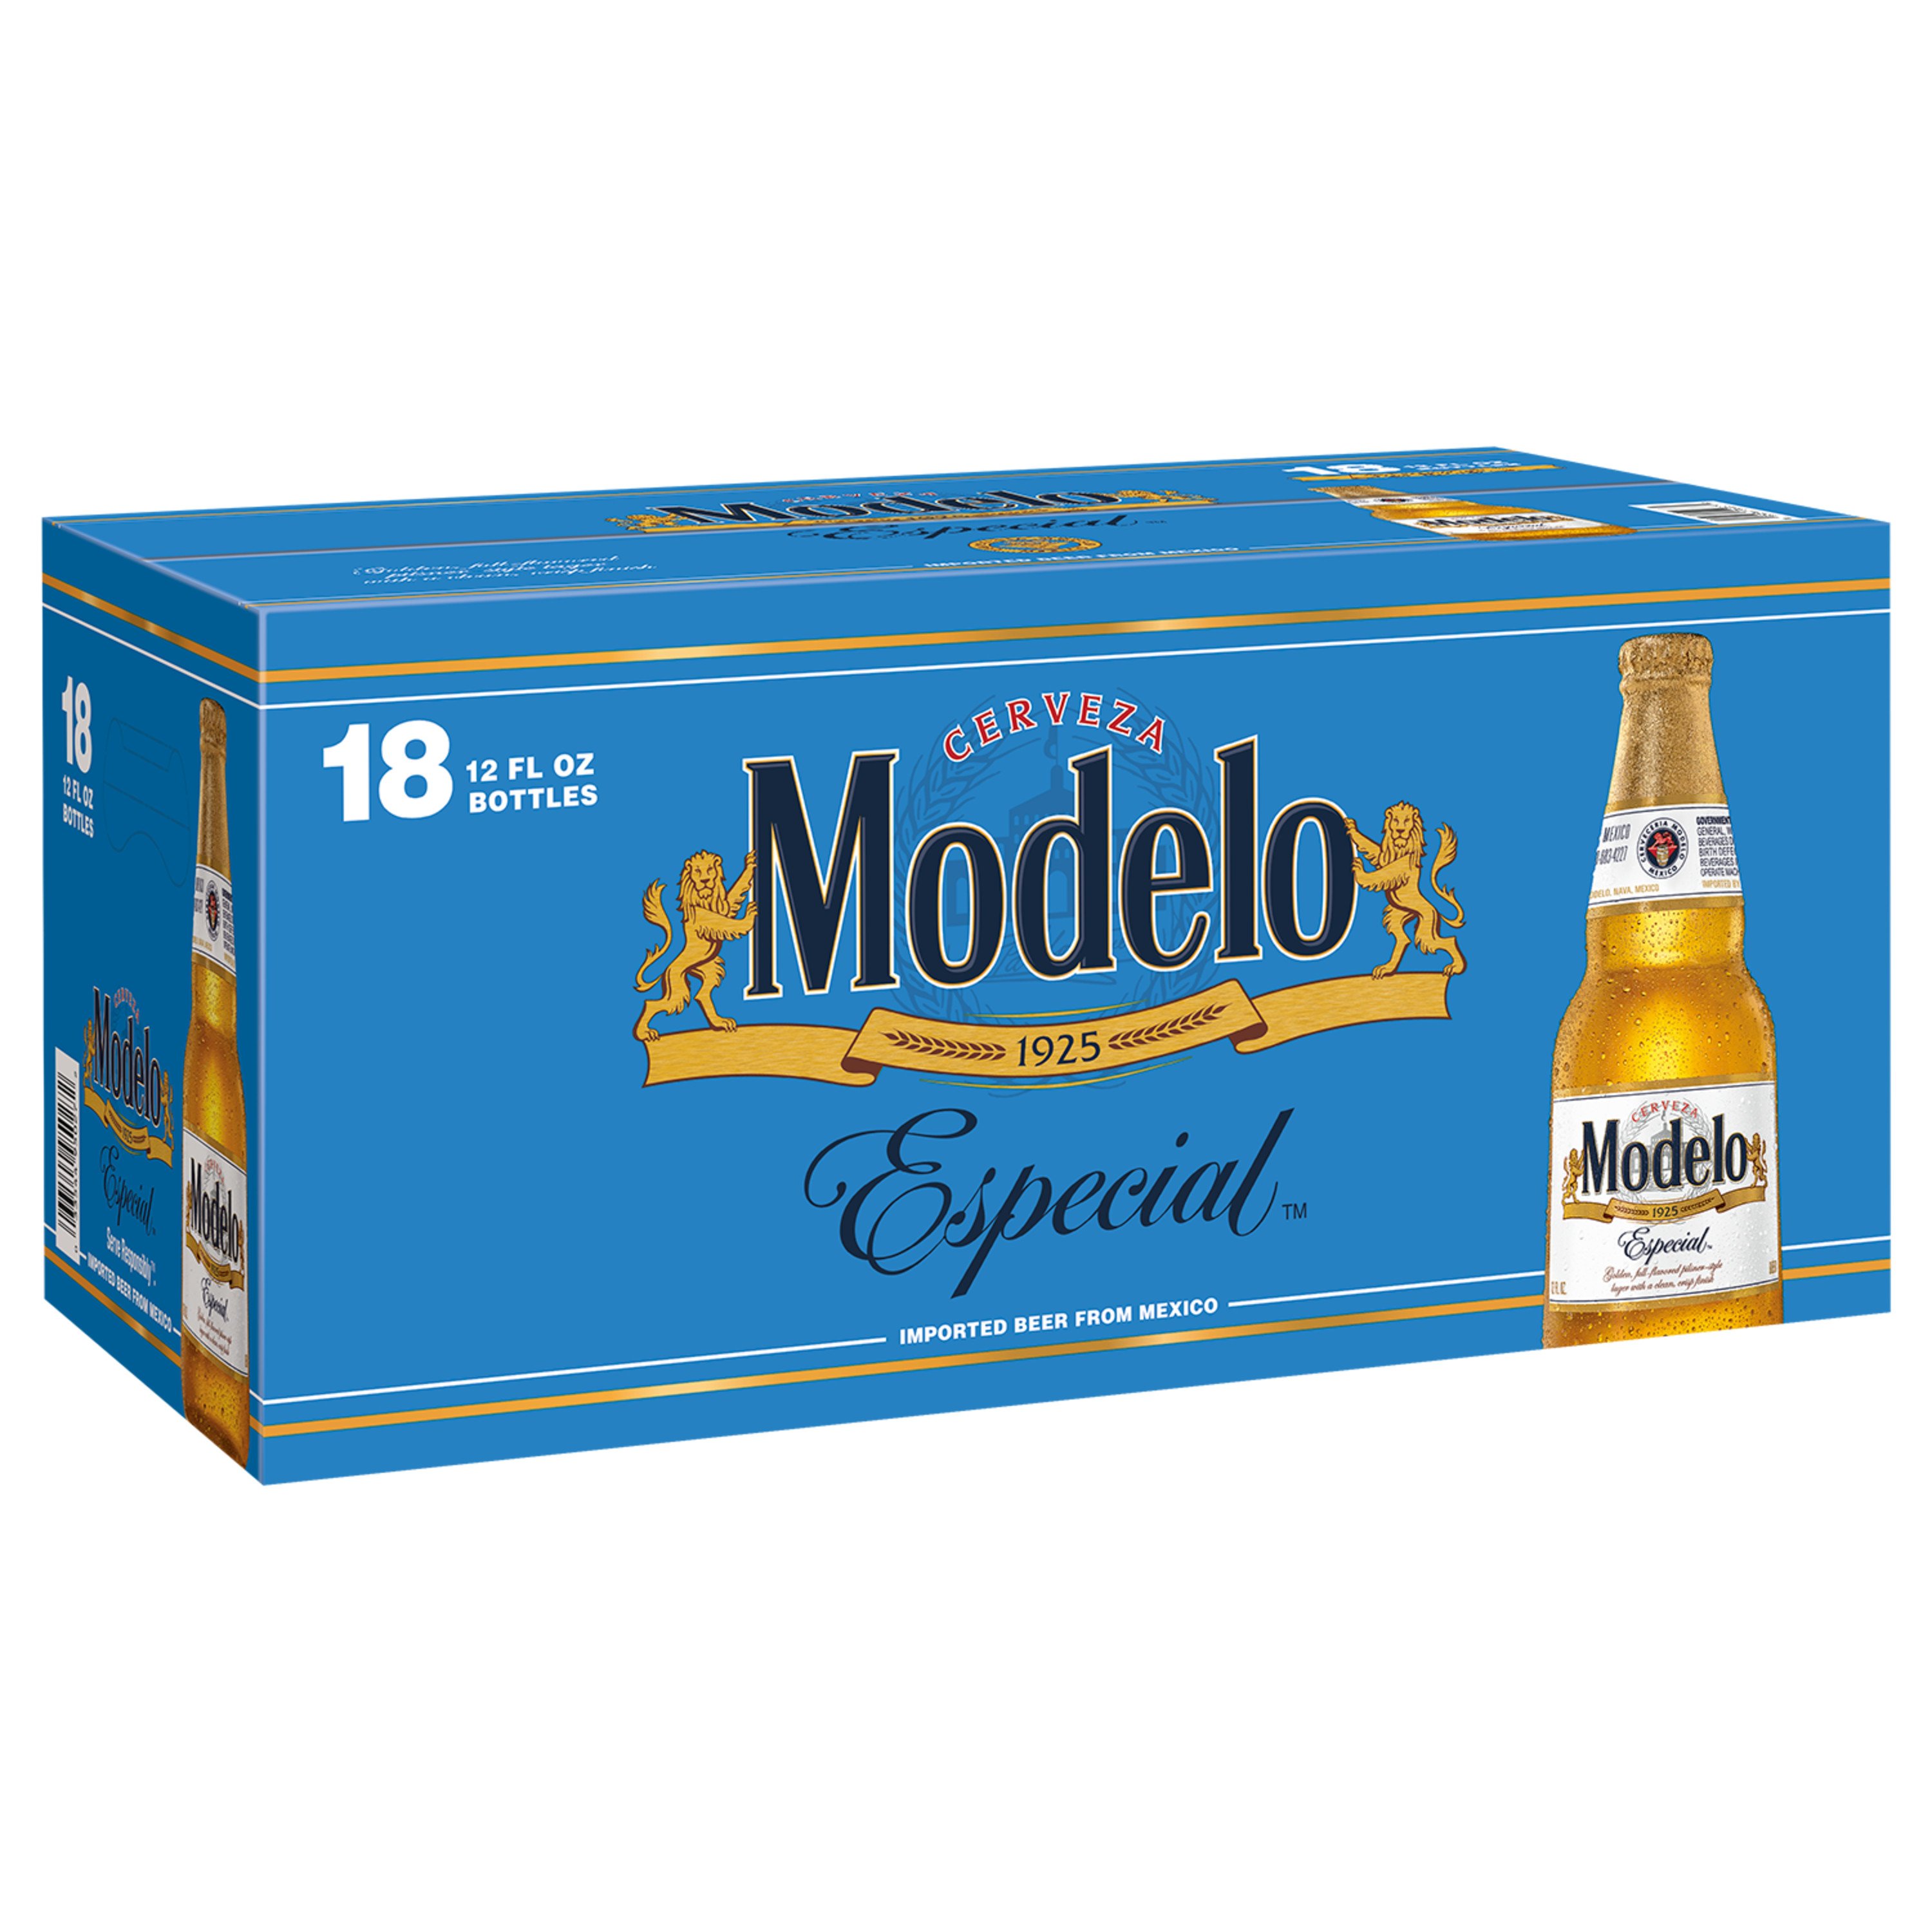 Modelo Especial Mexican Lager Beer 12 oz Bottles - Shop Beer at H-E-B